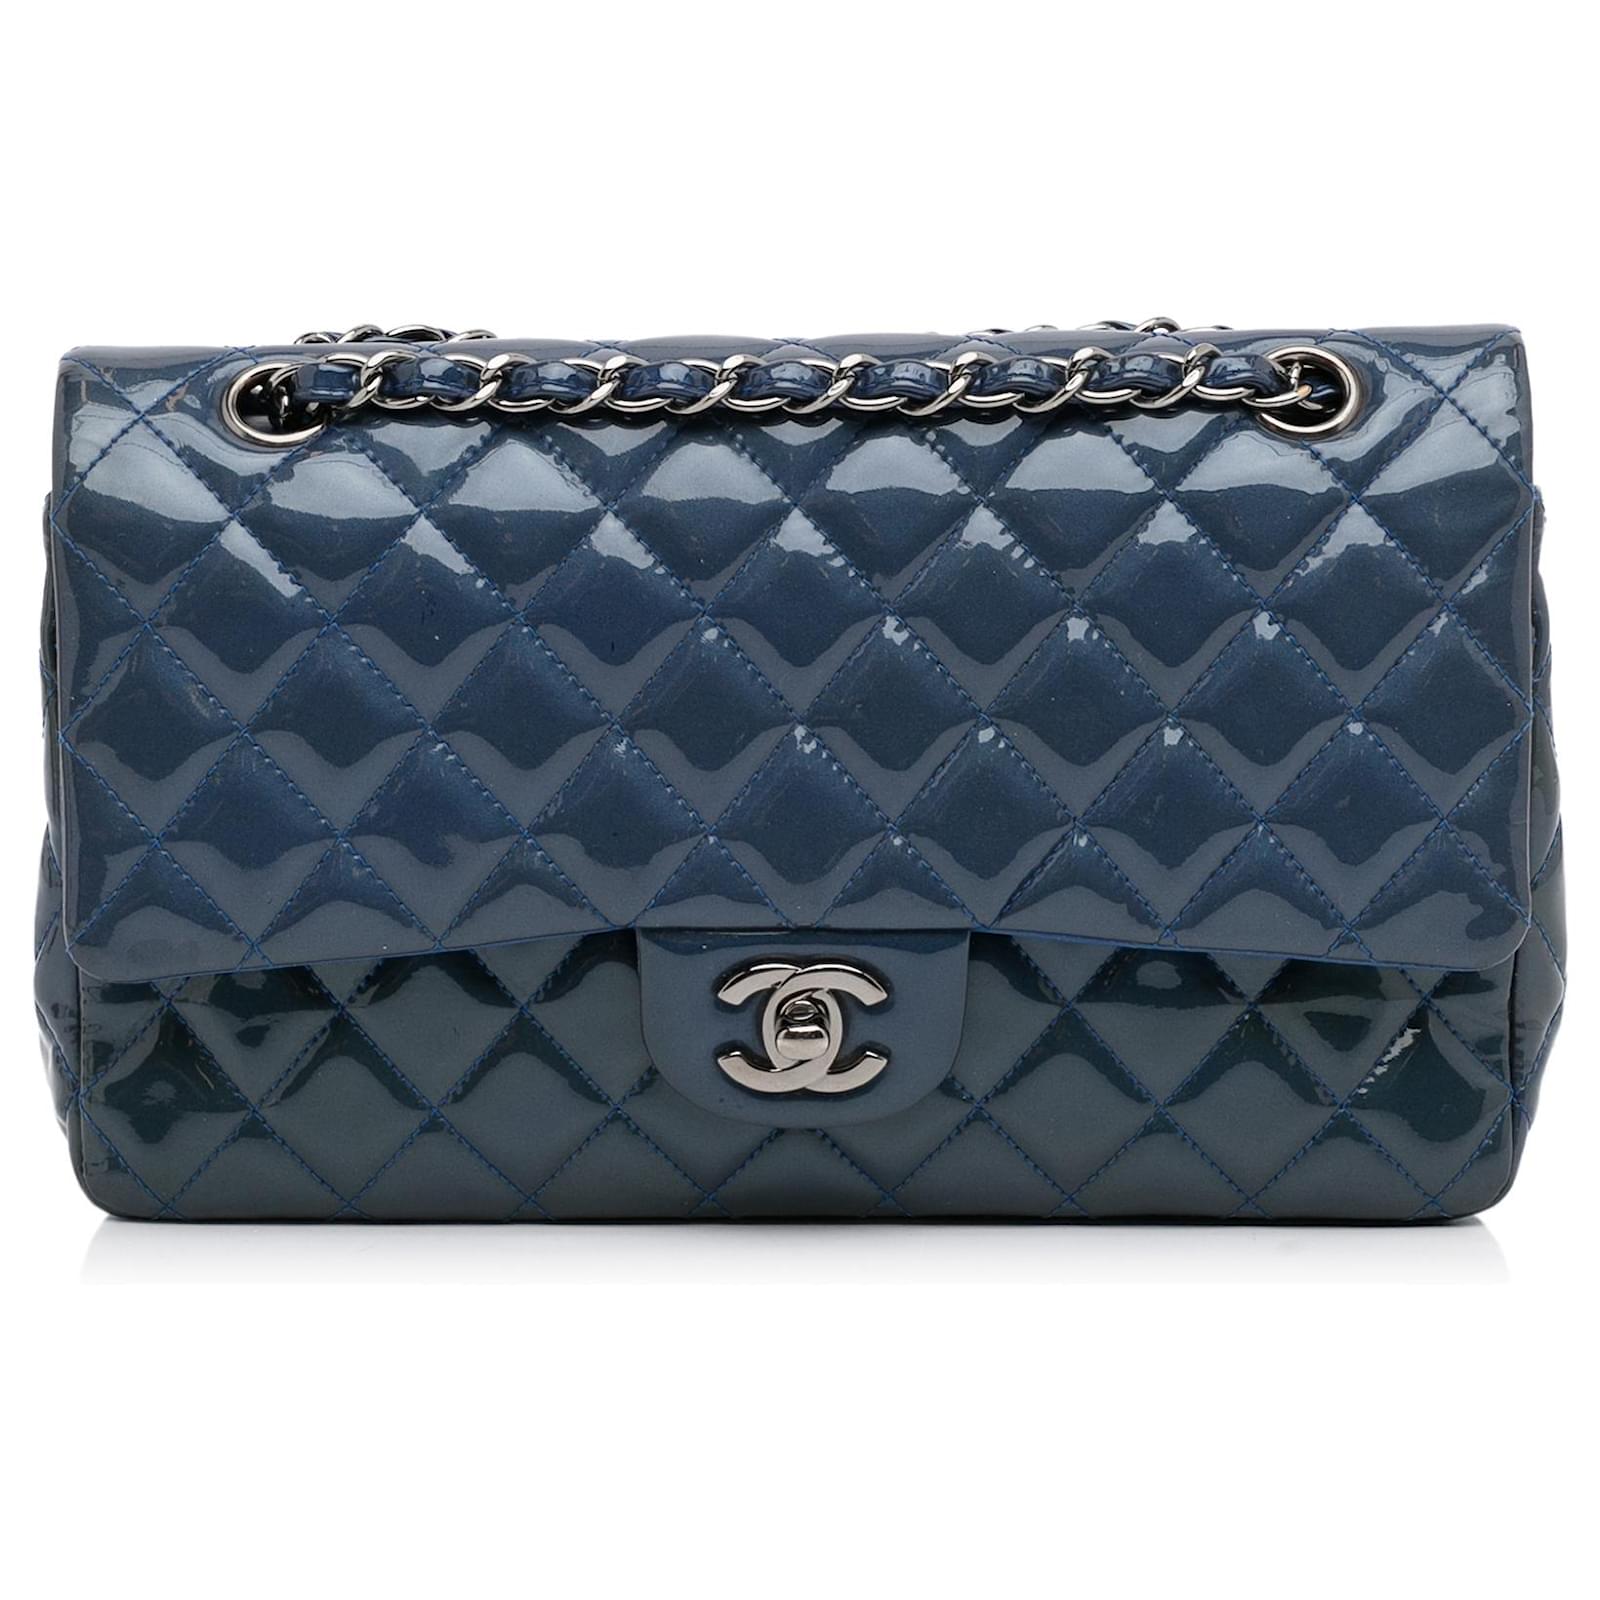 Chanel Blue Classic Medium Patent Leather lined Flap Bag Dark blue